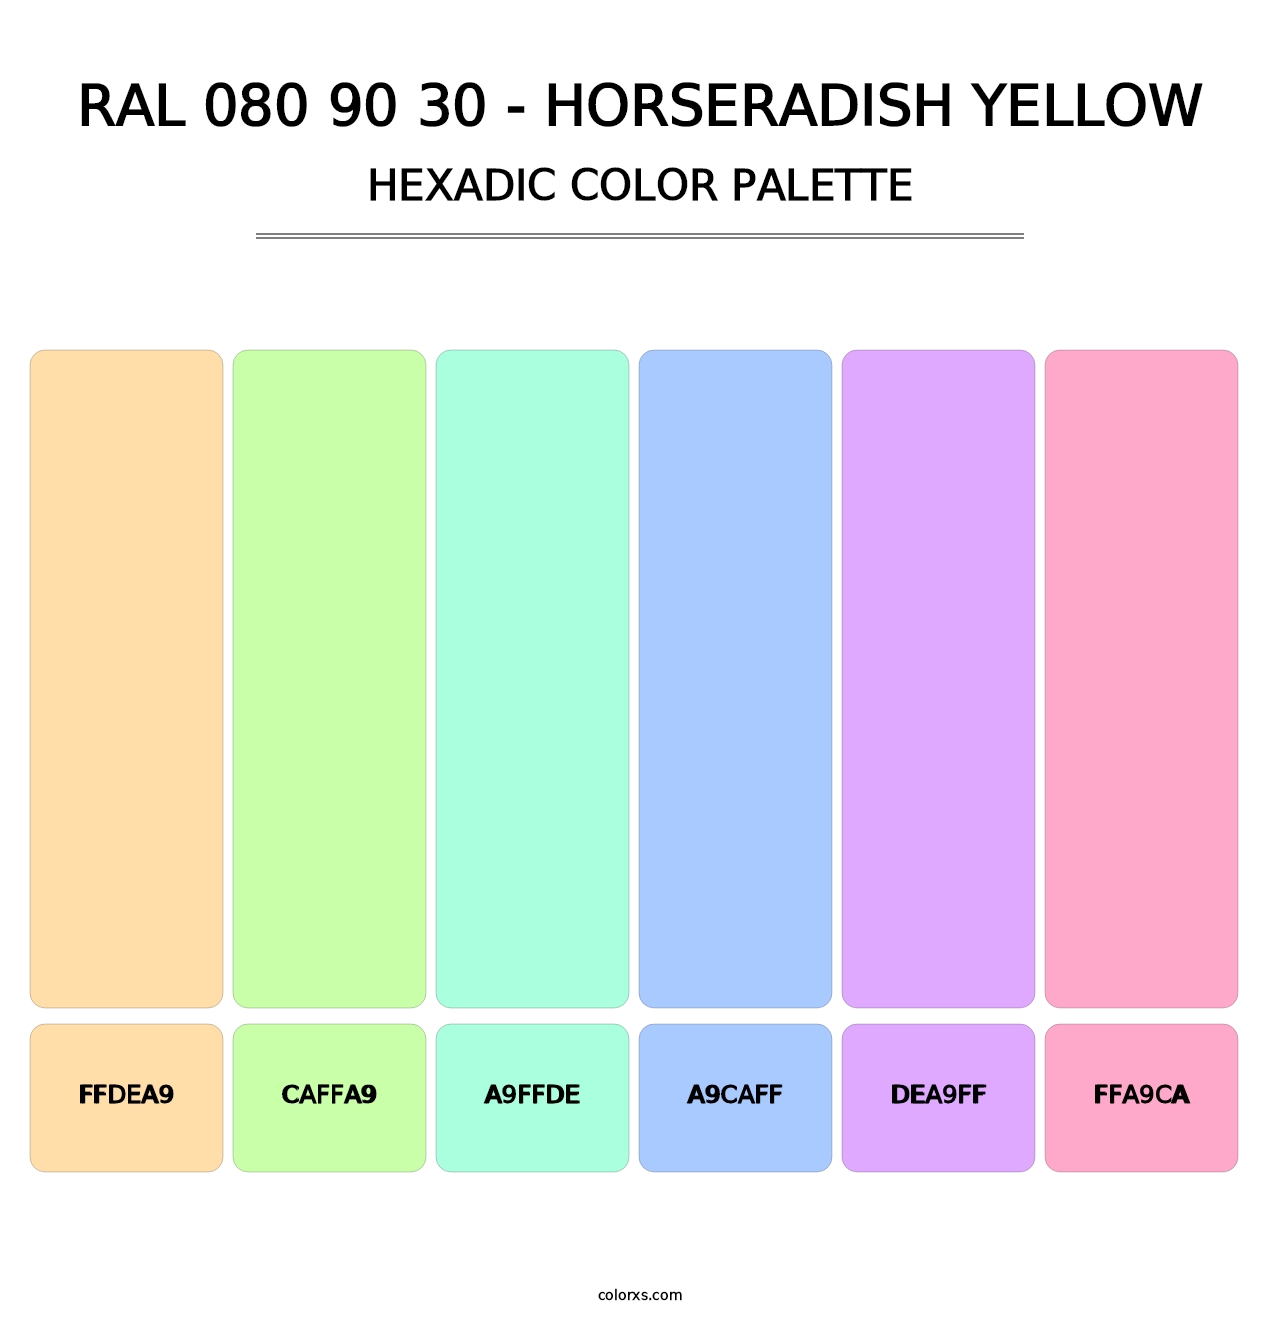 RAL 080 90 30 - Horseradish Yellow - Hexadic Color Palette